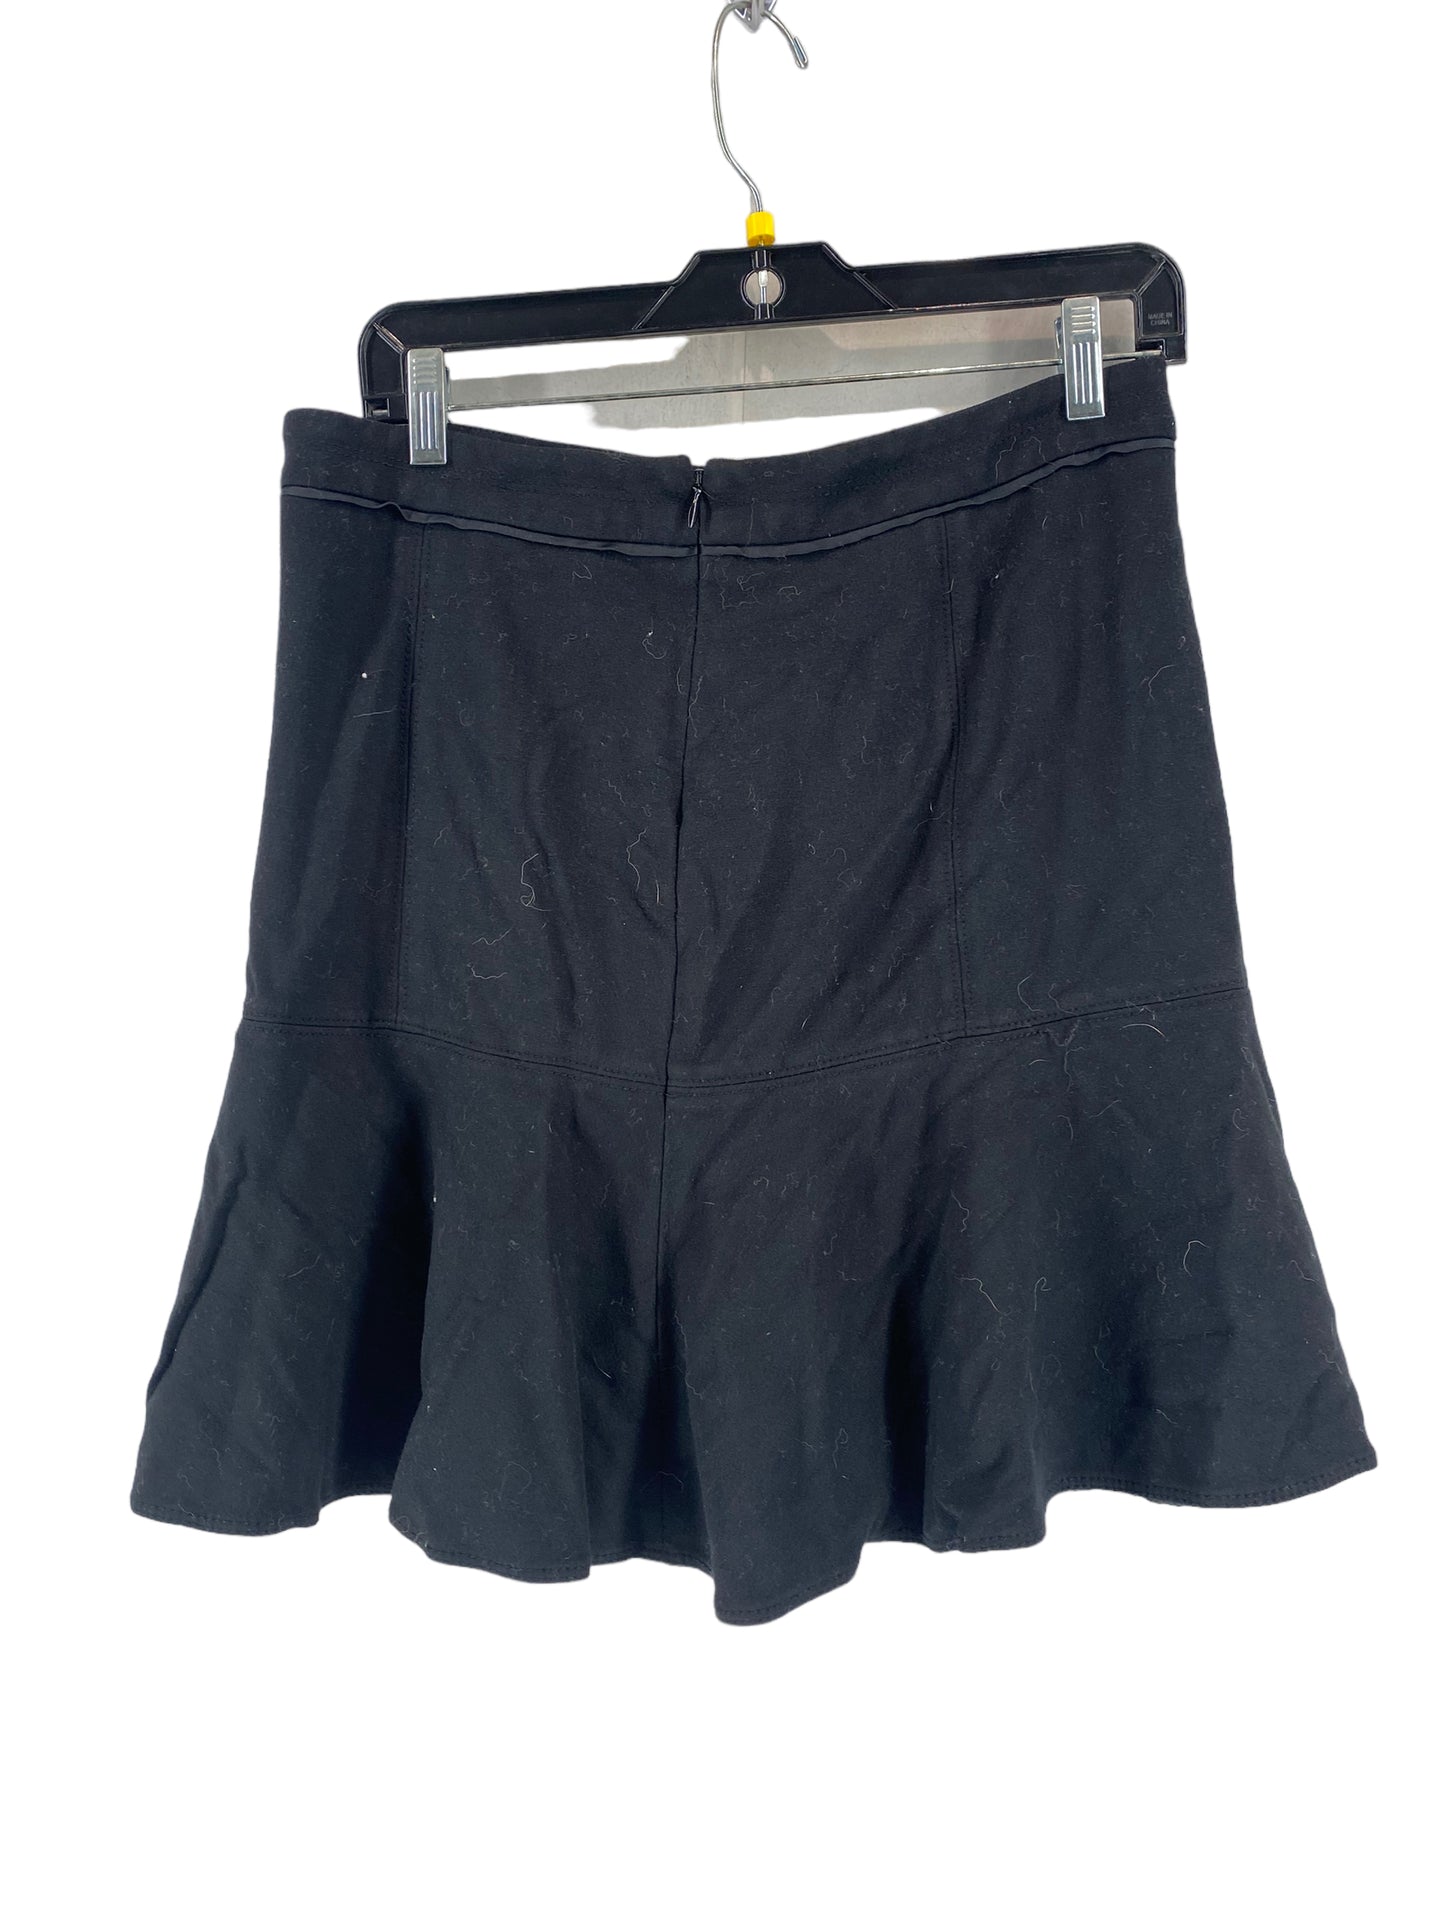 Skirt Midi By White House Black Market  Size: M